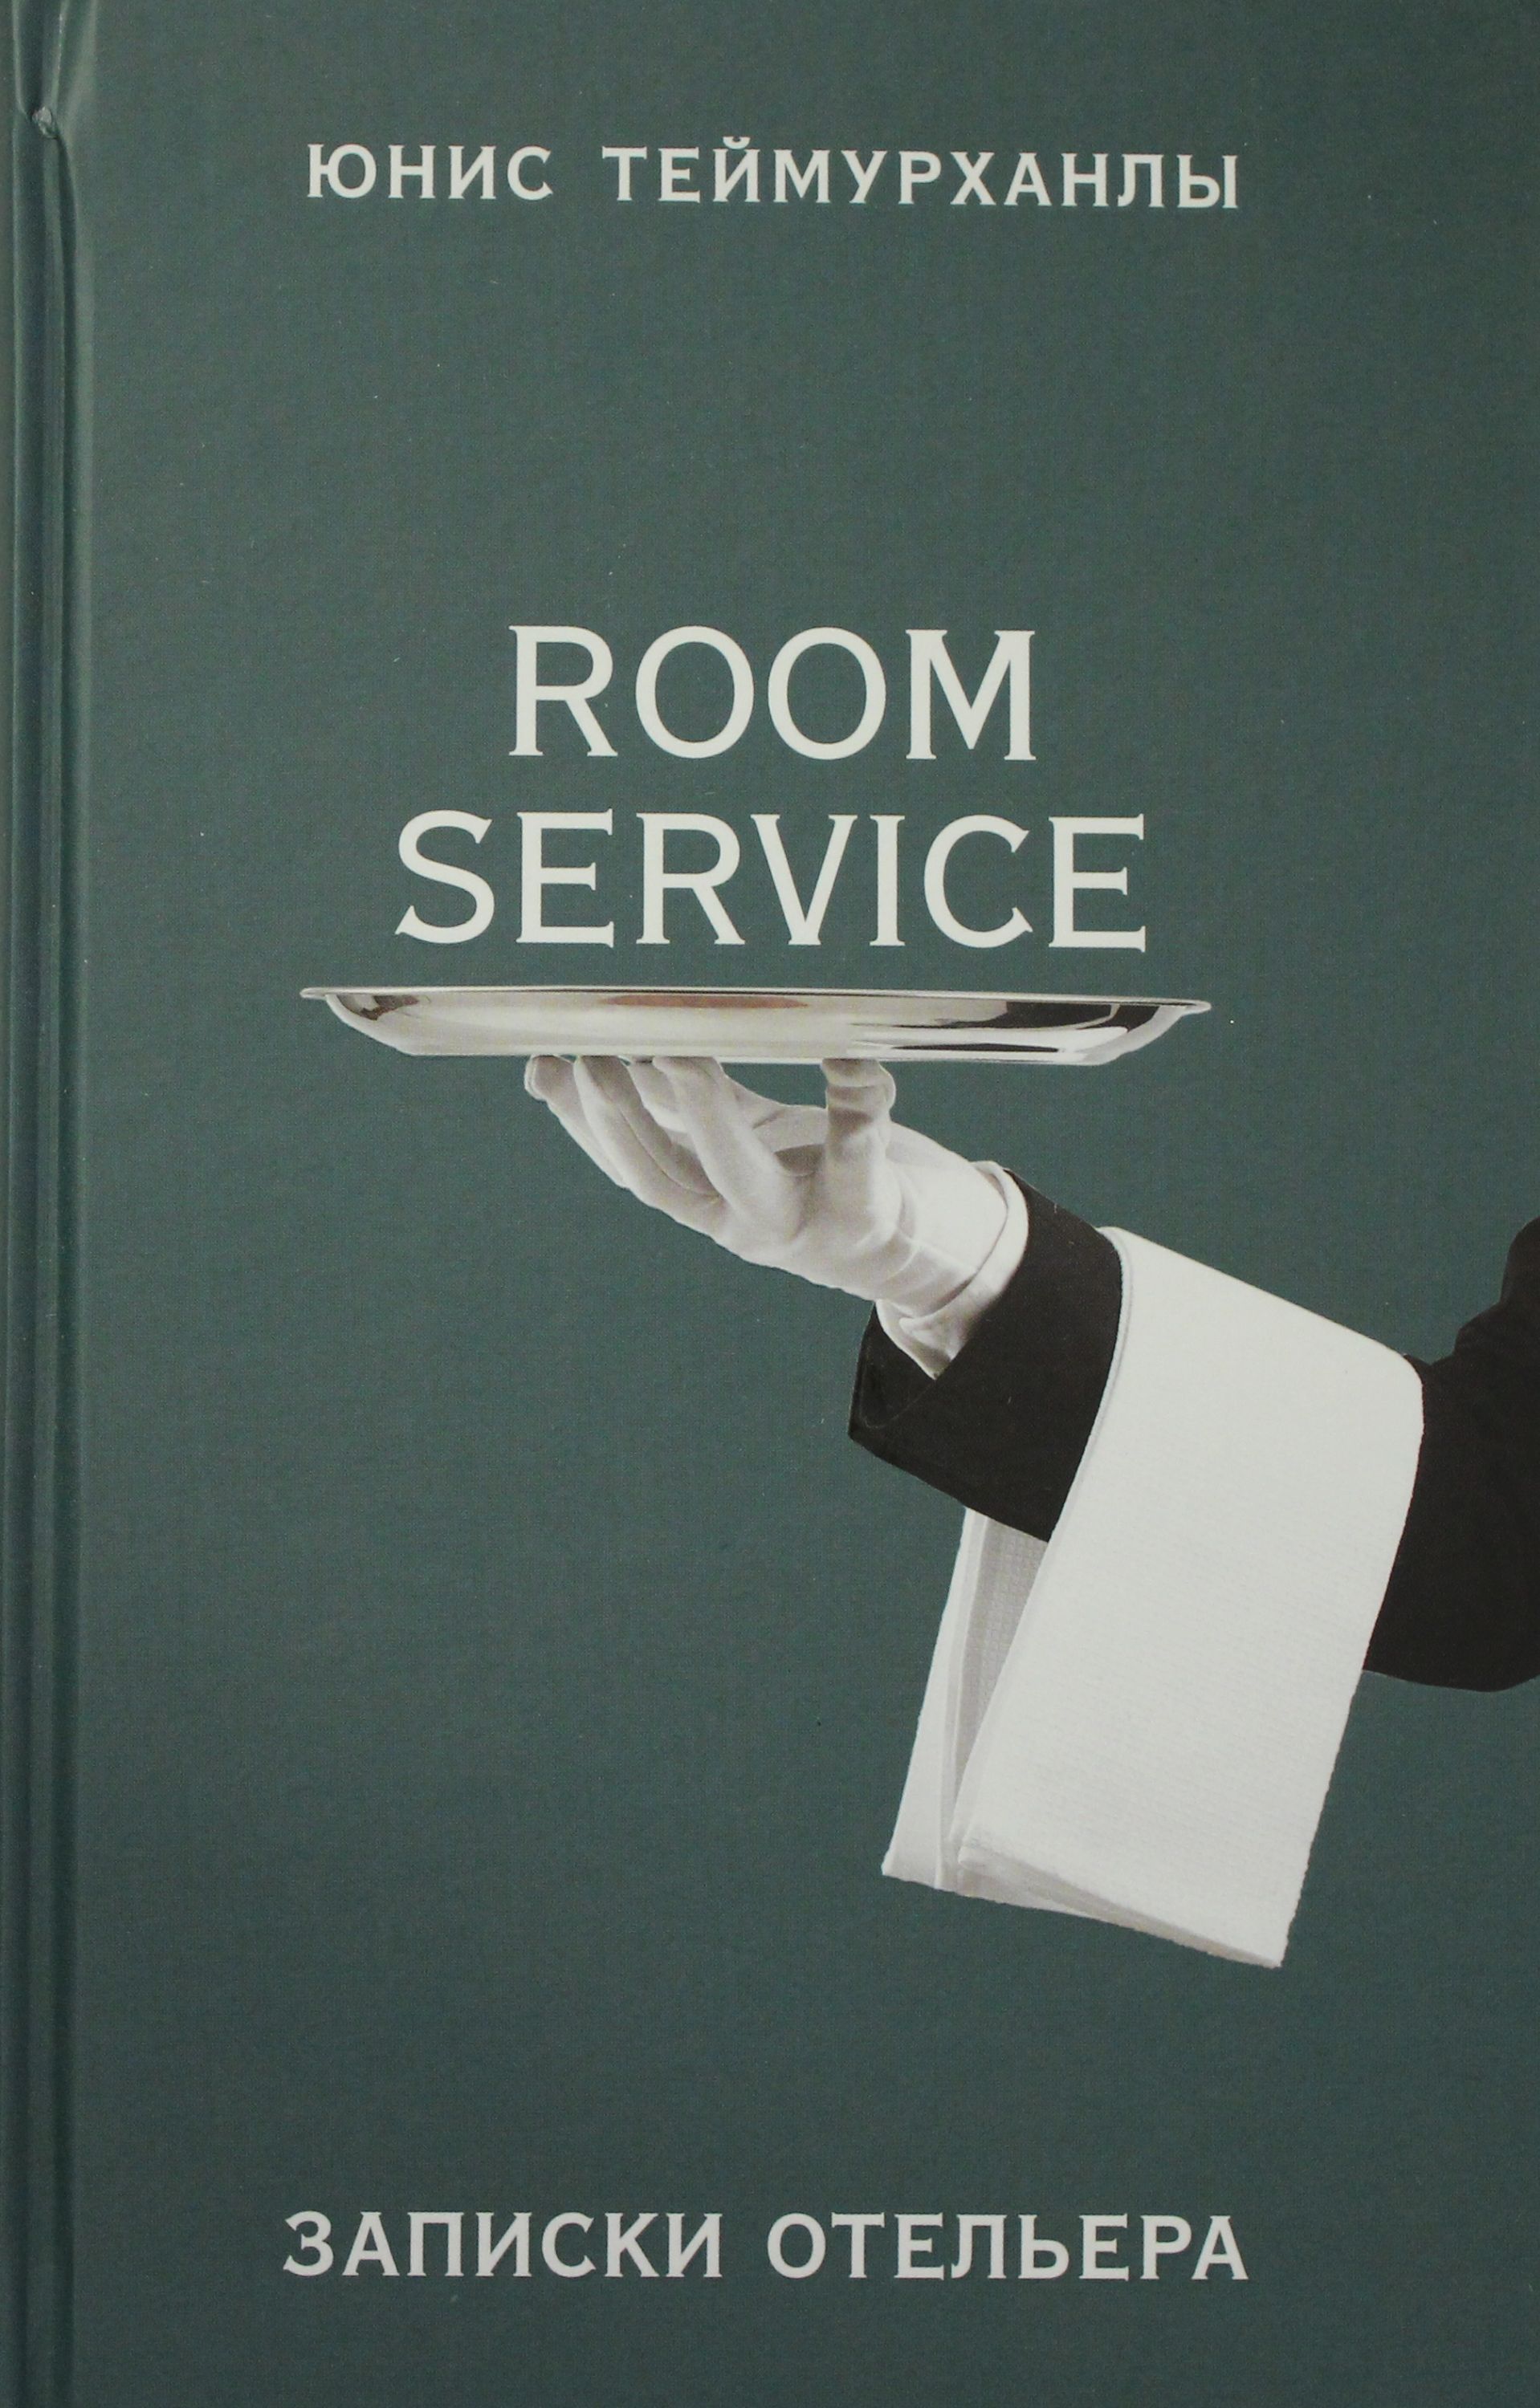 Room service.  